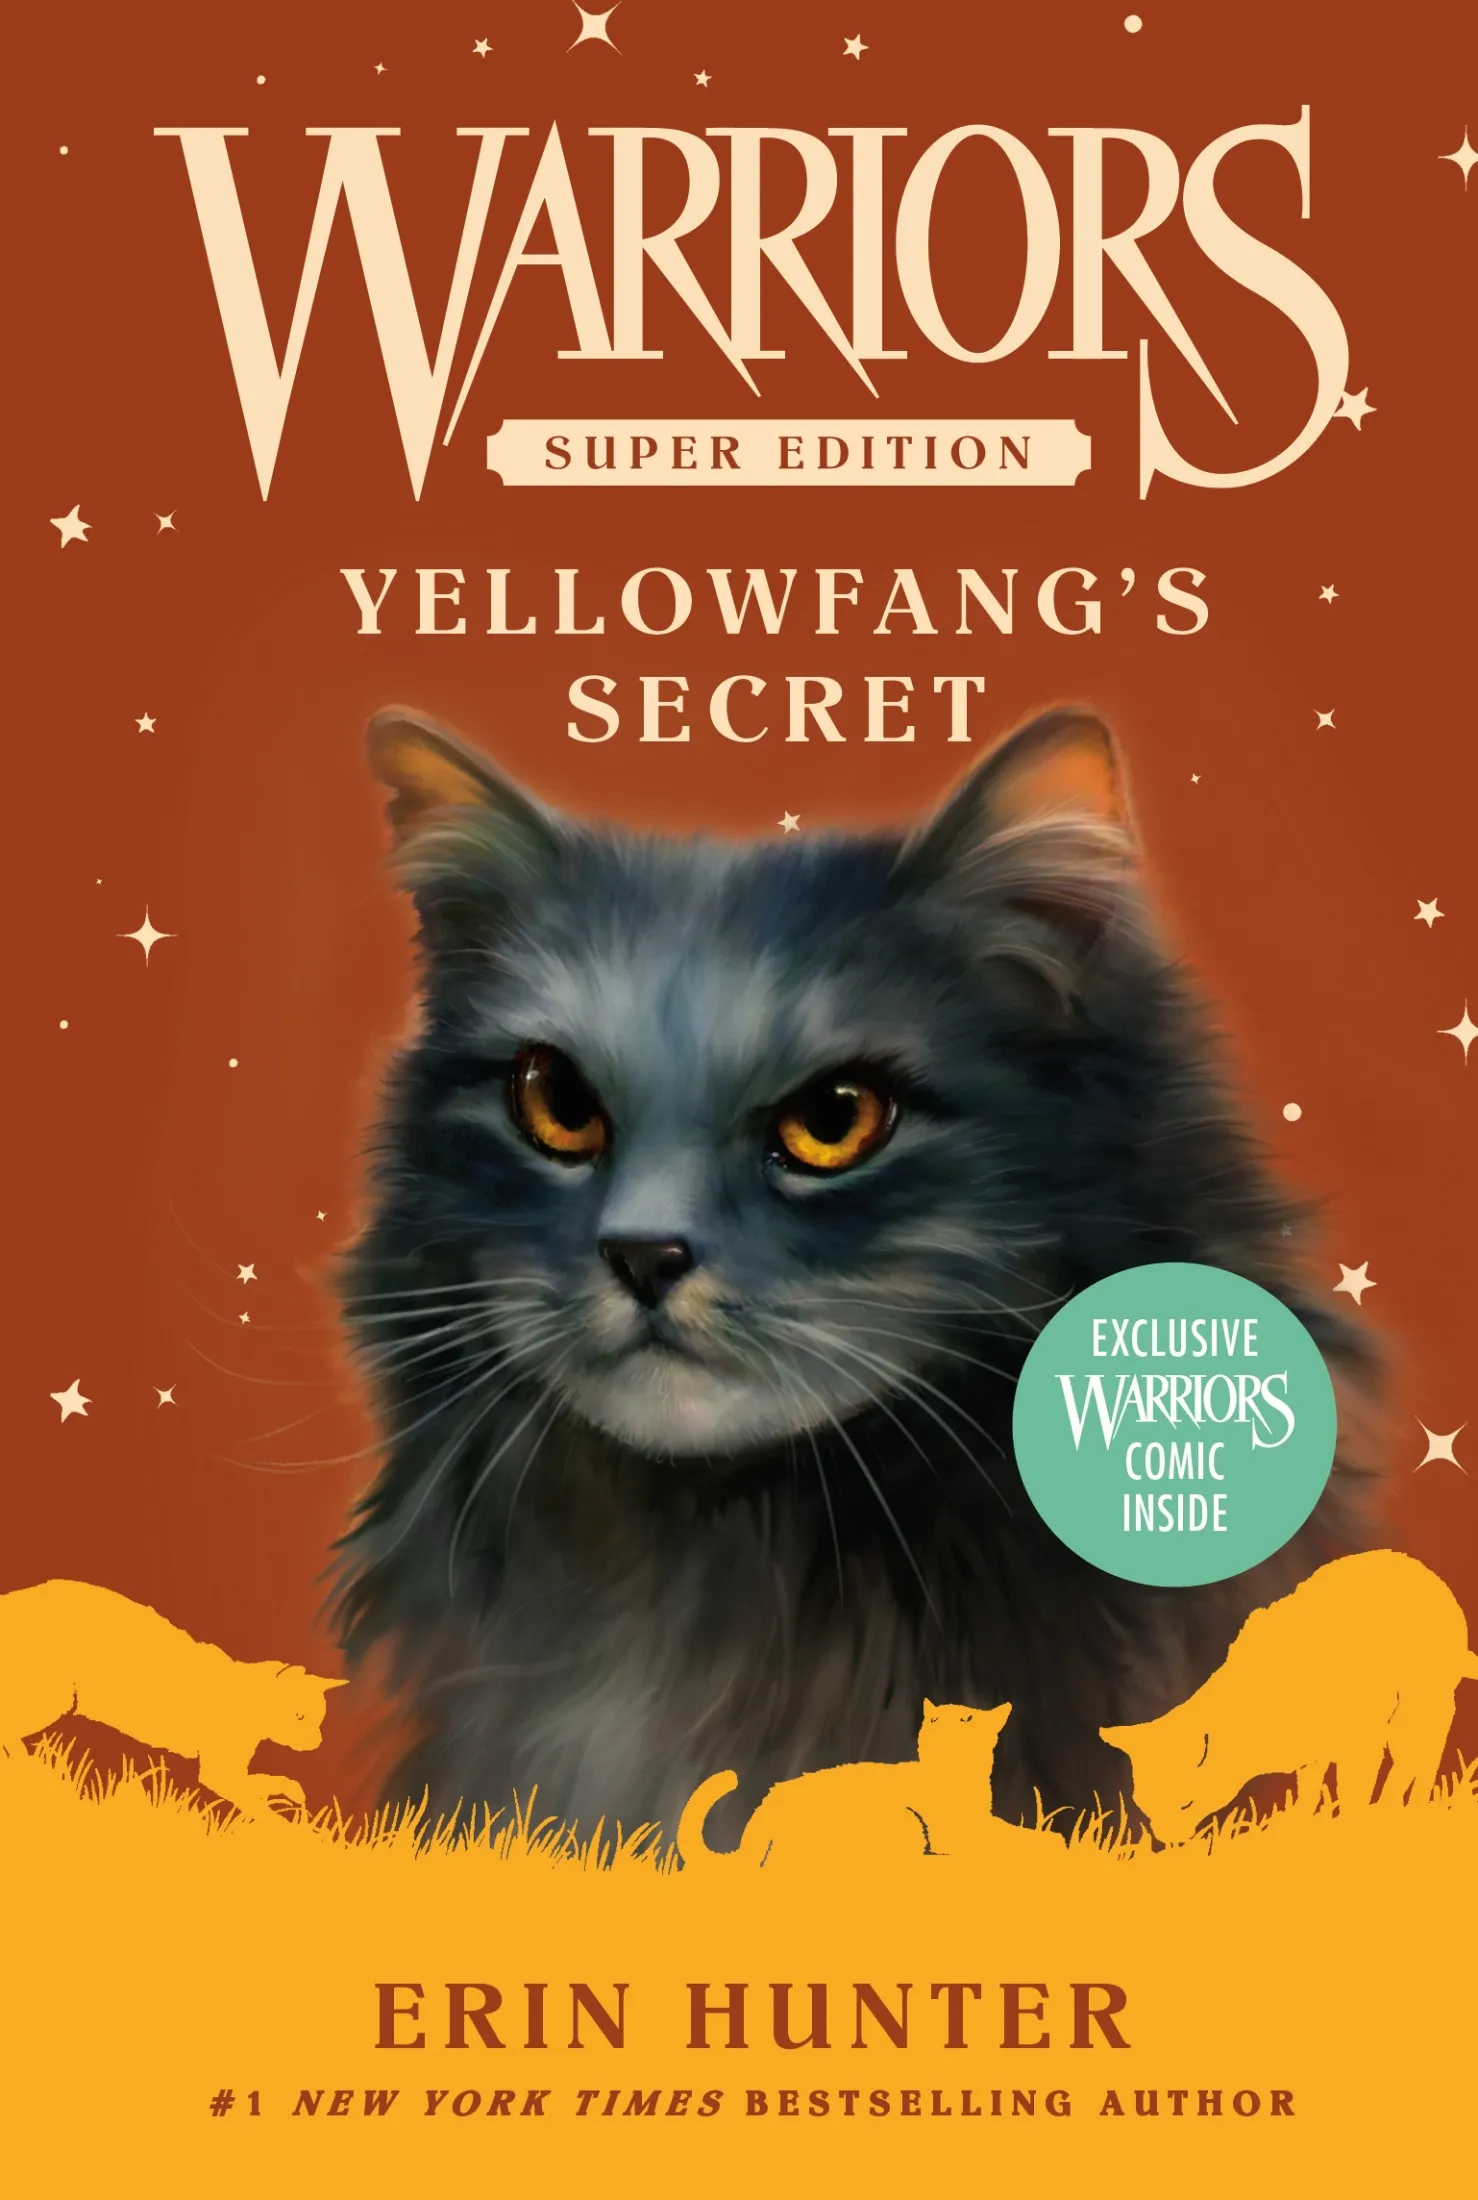 Yellowfang's Secret (Warriors: Super Edition #5)